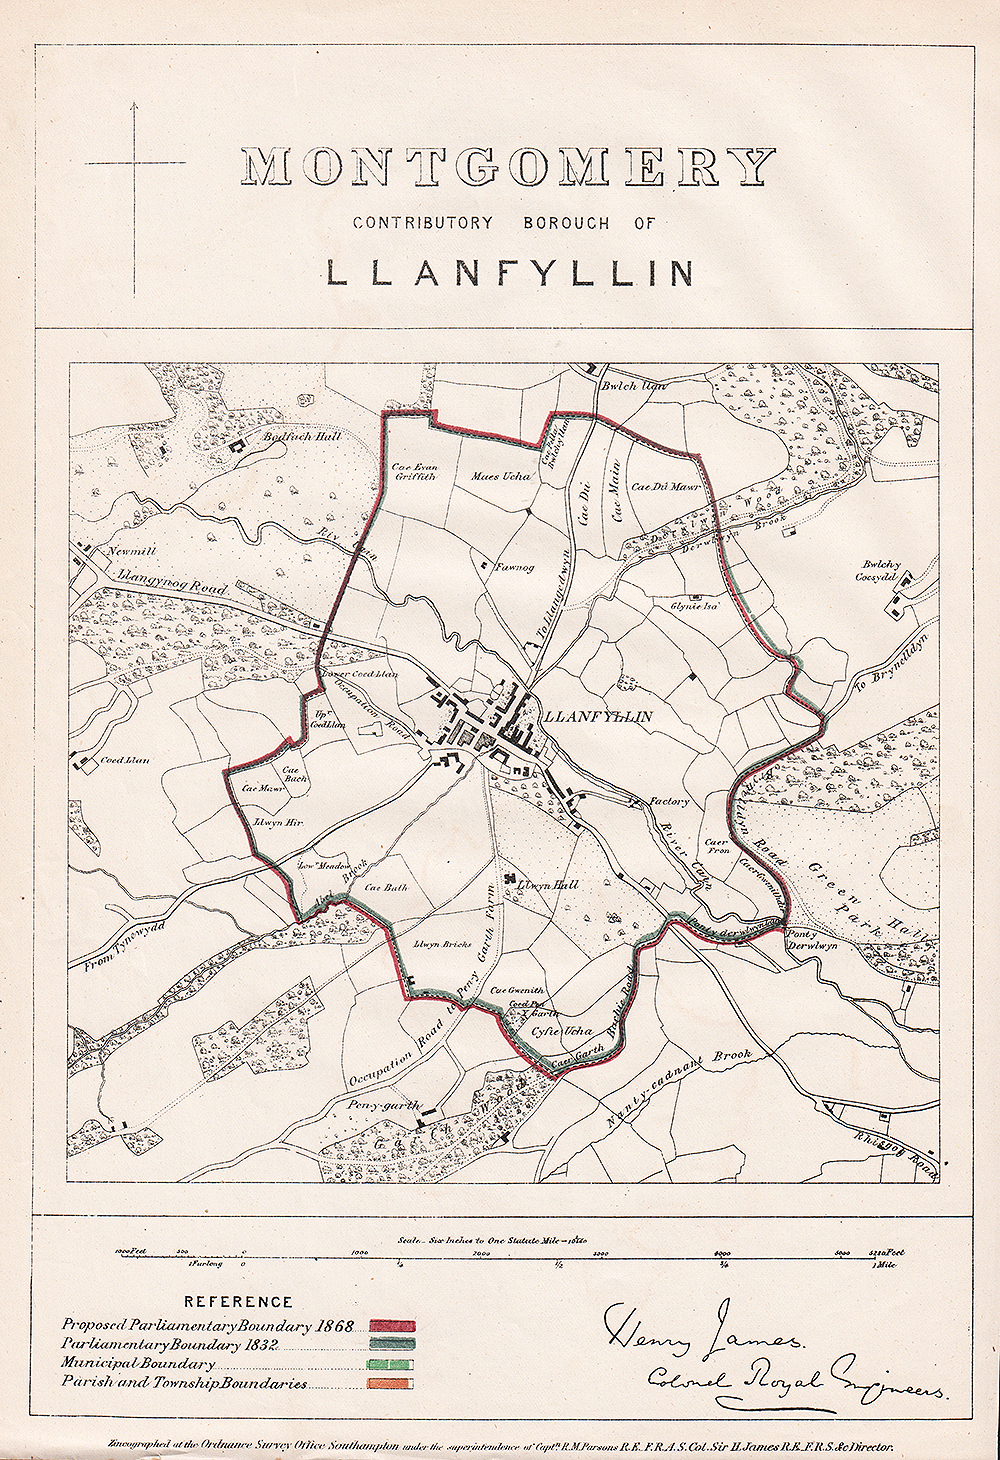 Contibutory Borough of Llanfyllin 